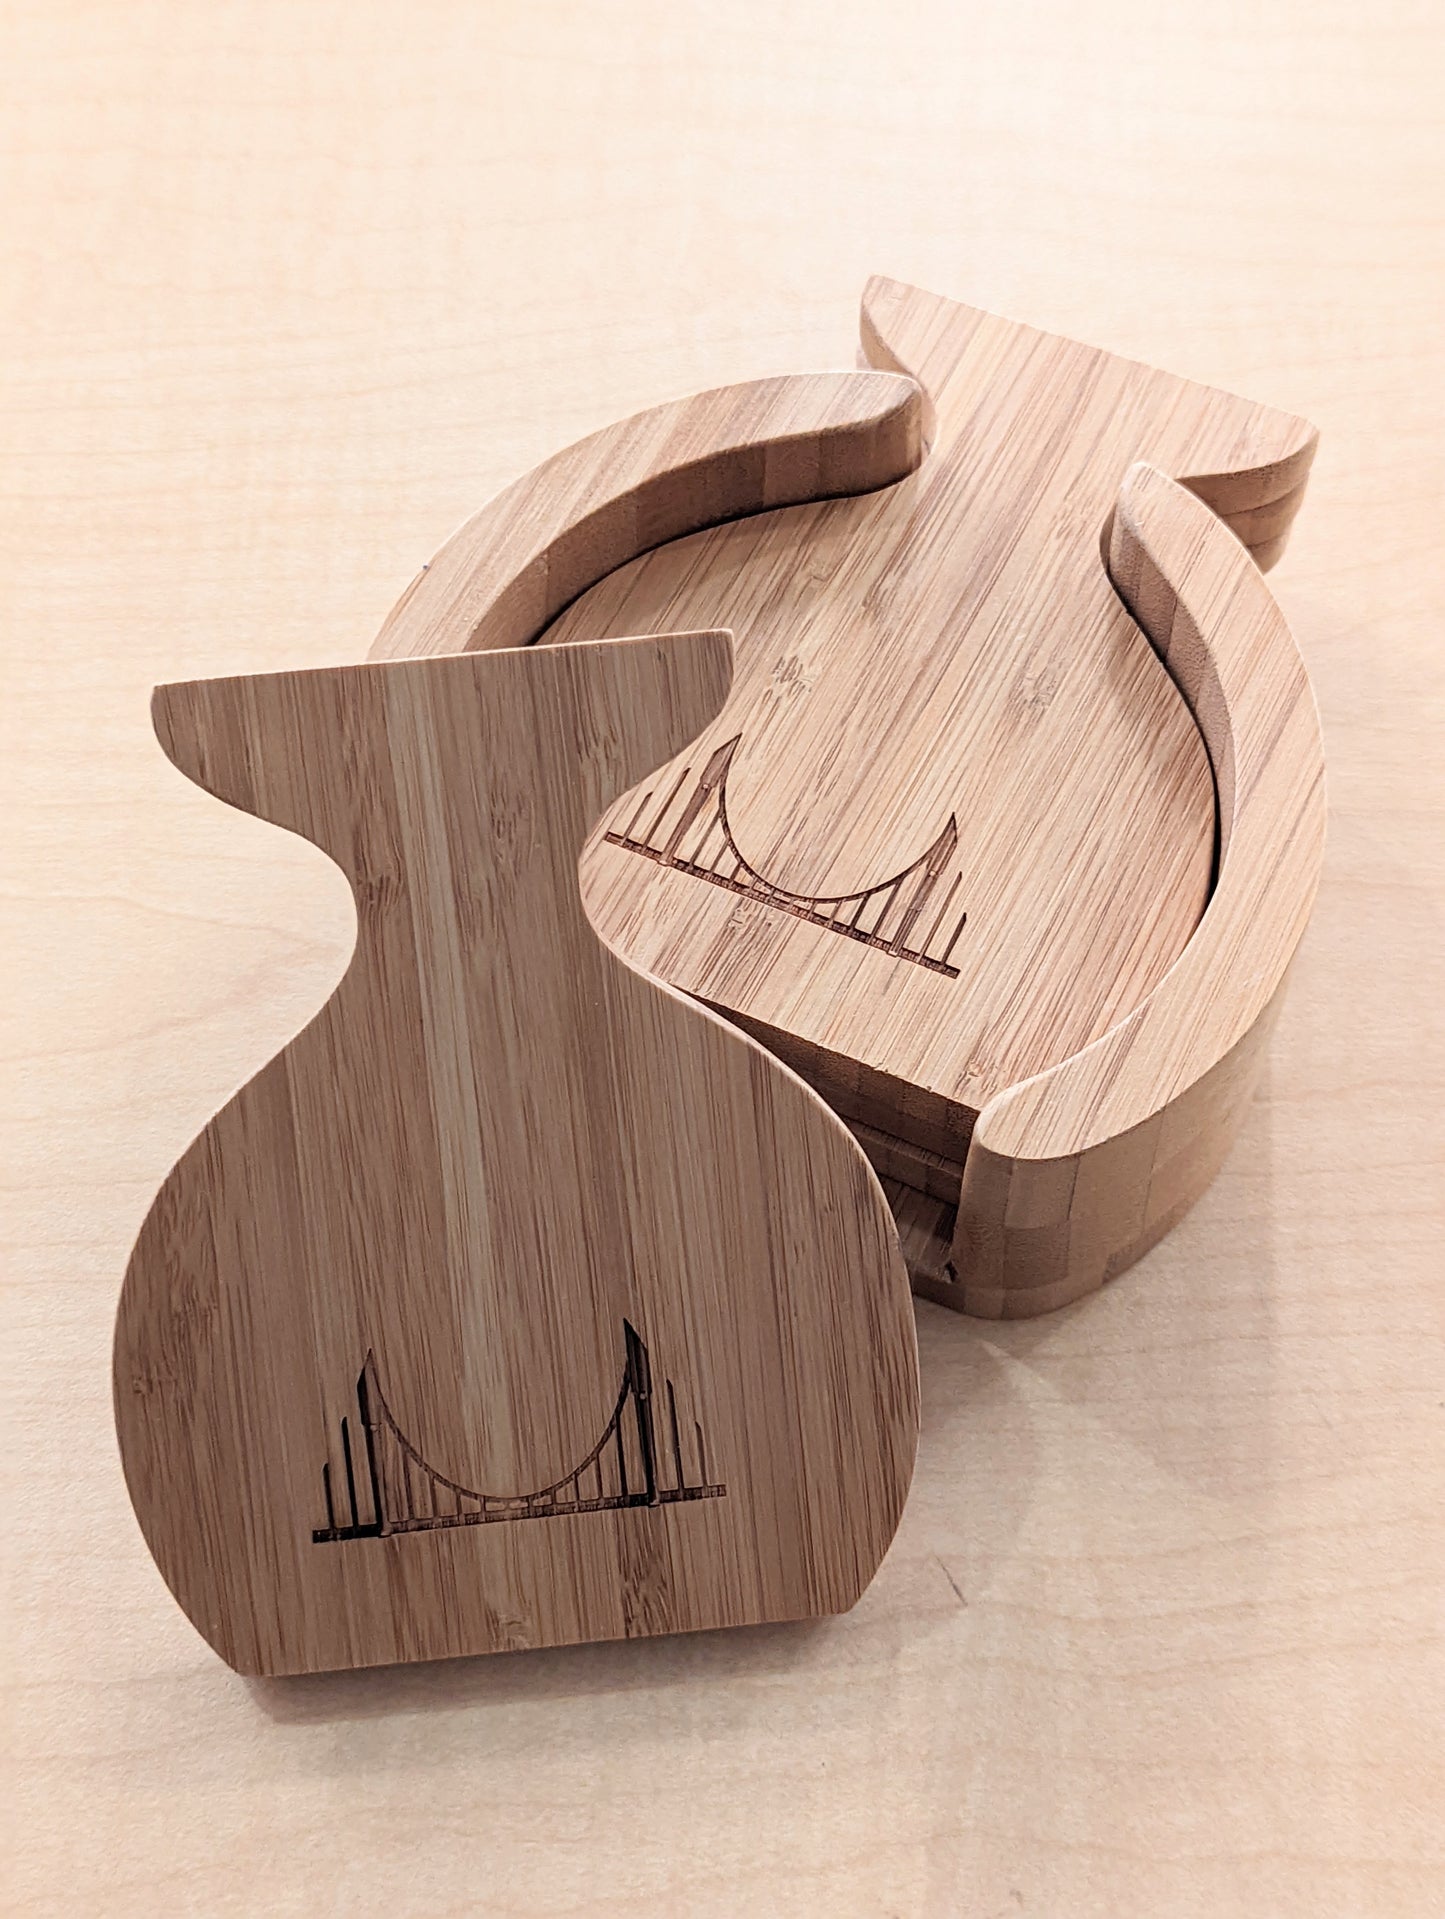 BSIM Wood Coaster Set of 4 - Whale Tail